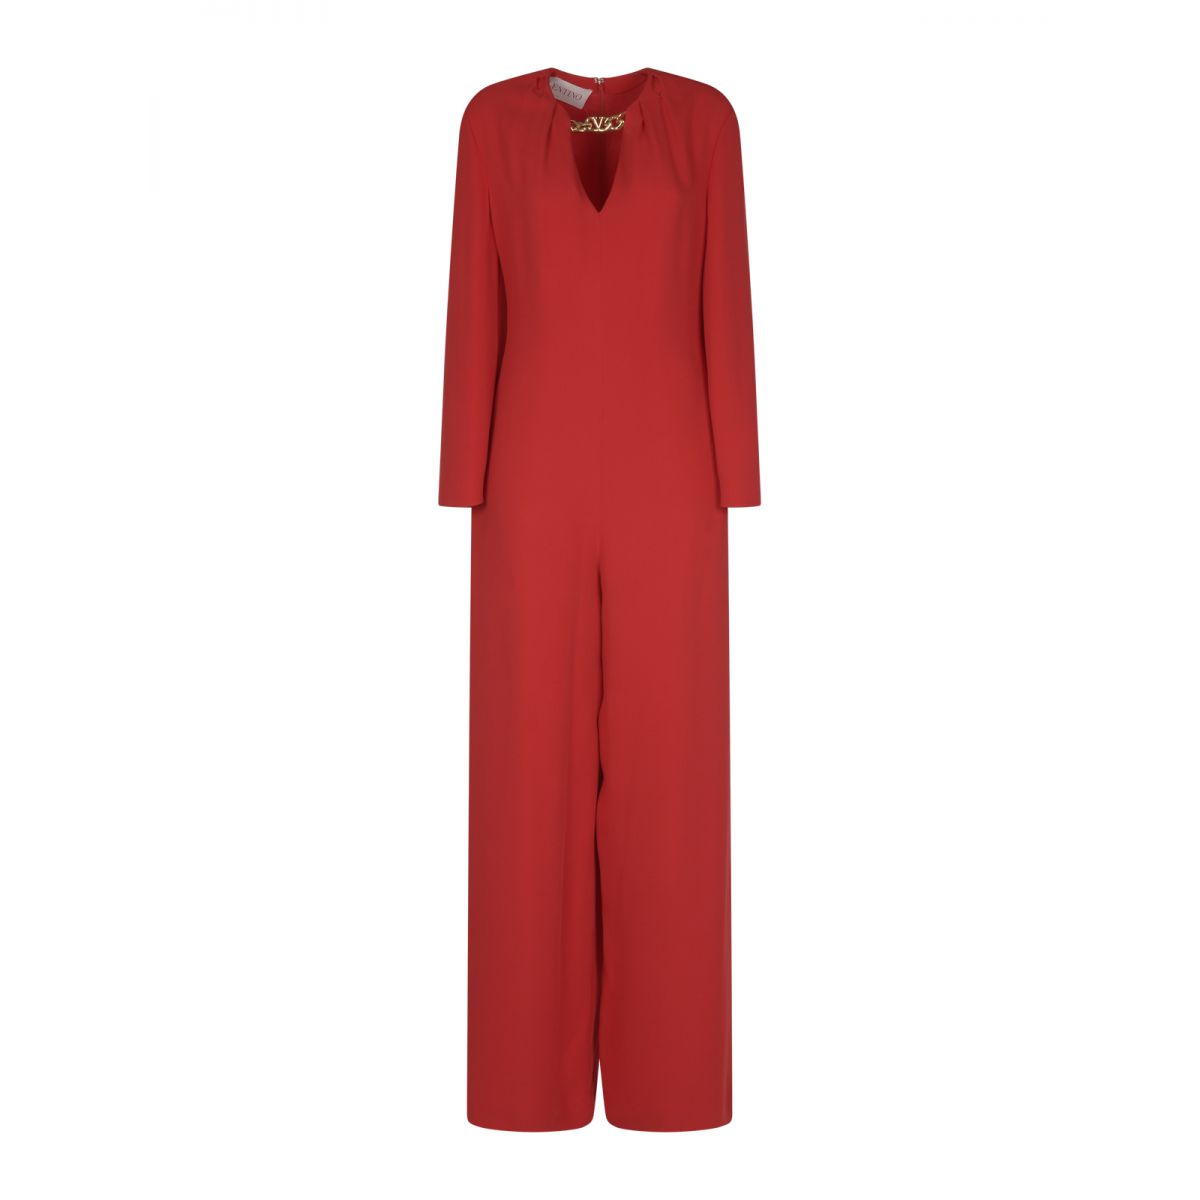 Valentino - Red crepe jumpsuit